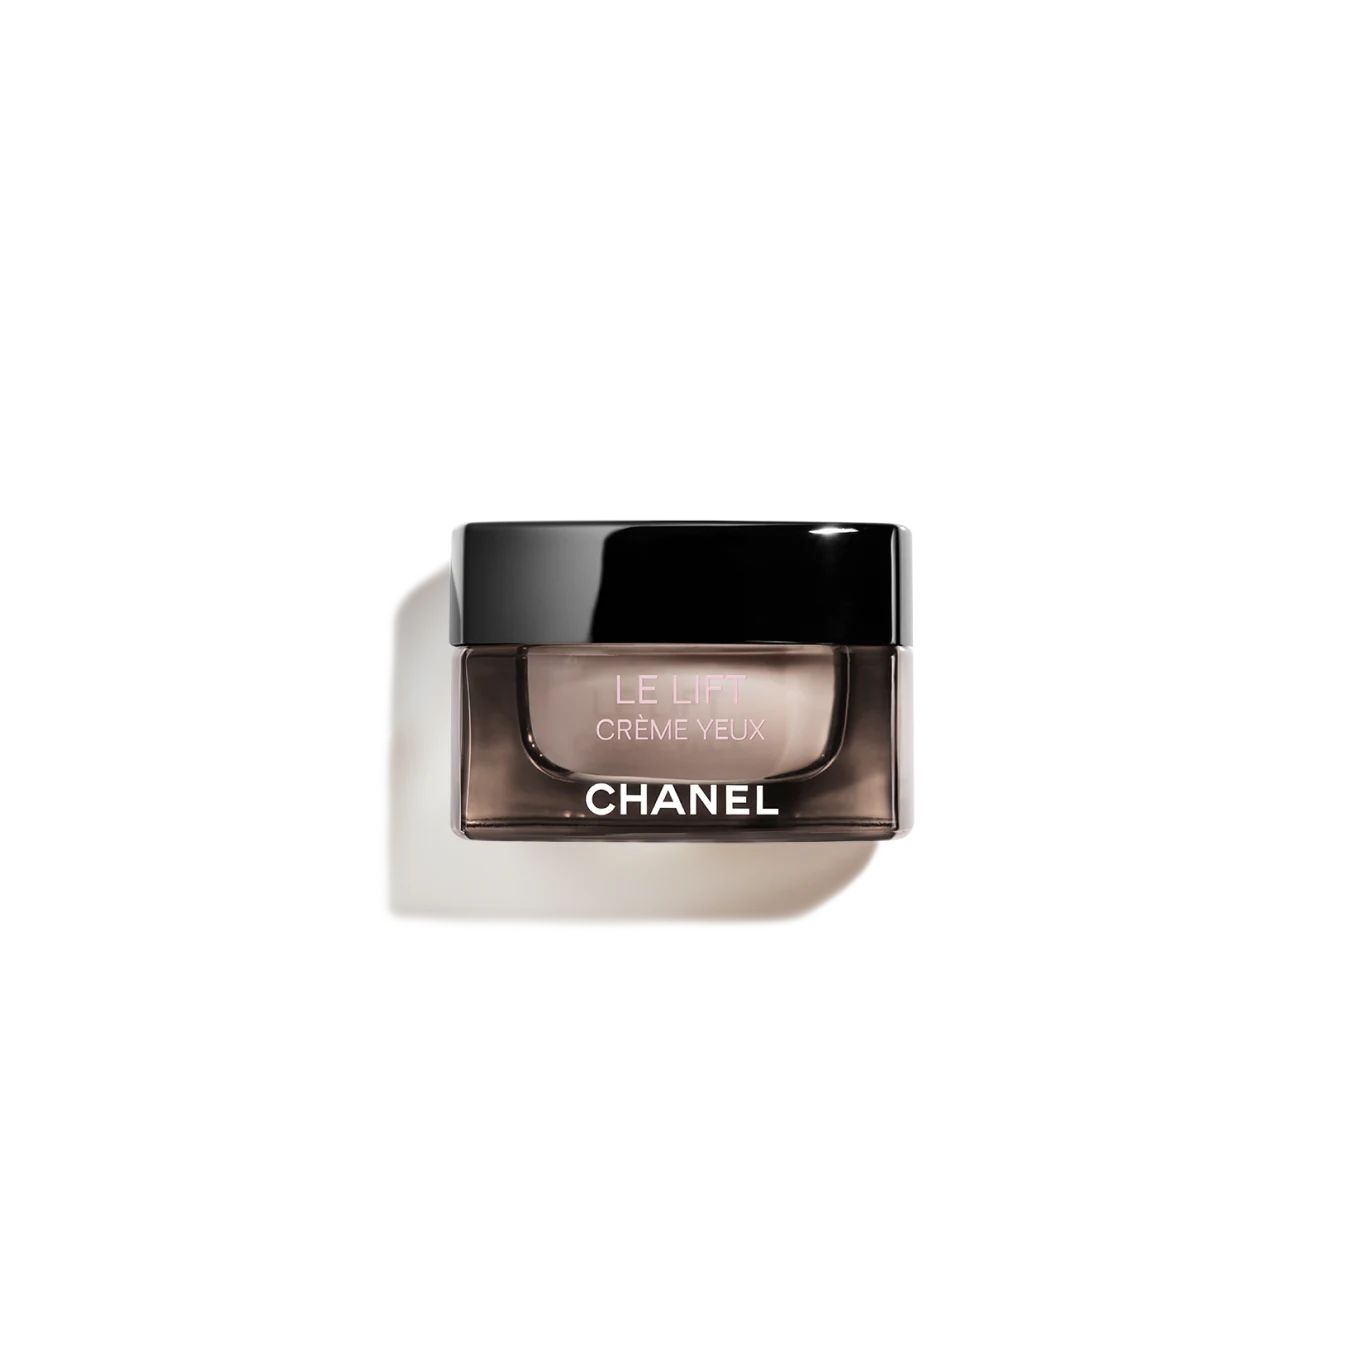 LE LIFT CRÈME YEUX

            
            Smooths – Firms | Chanel, Inc. (US)